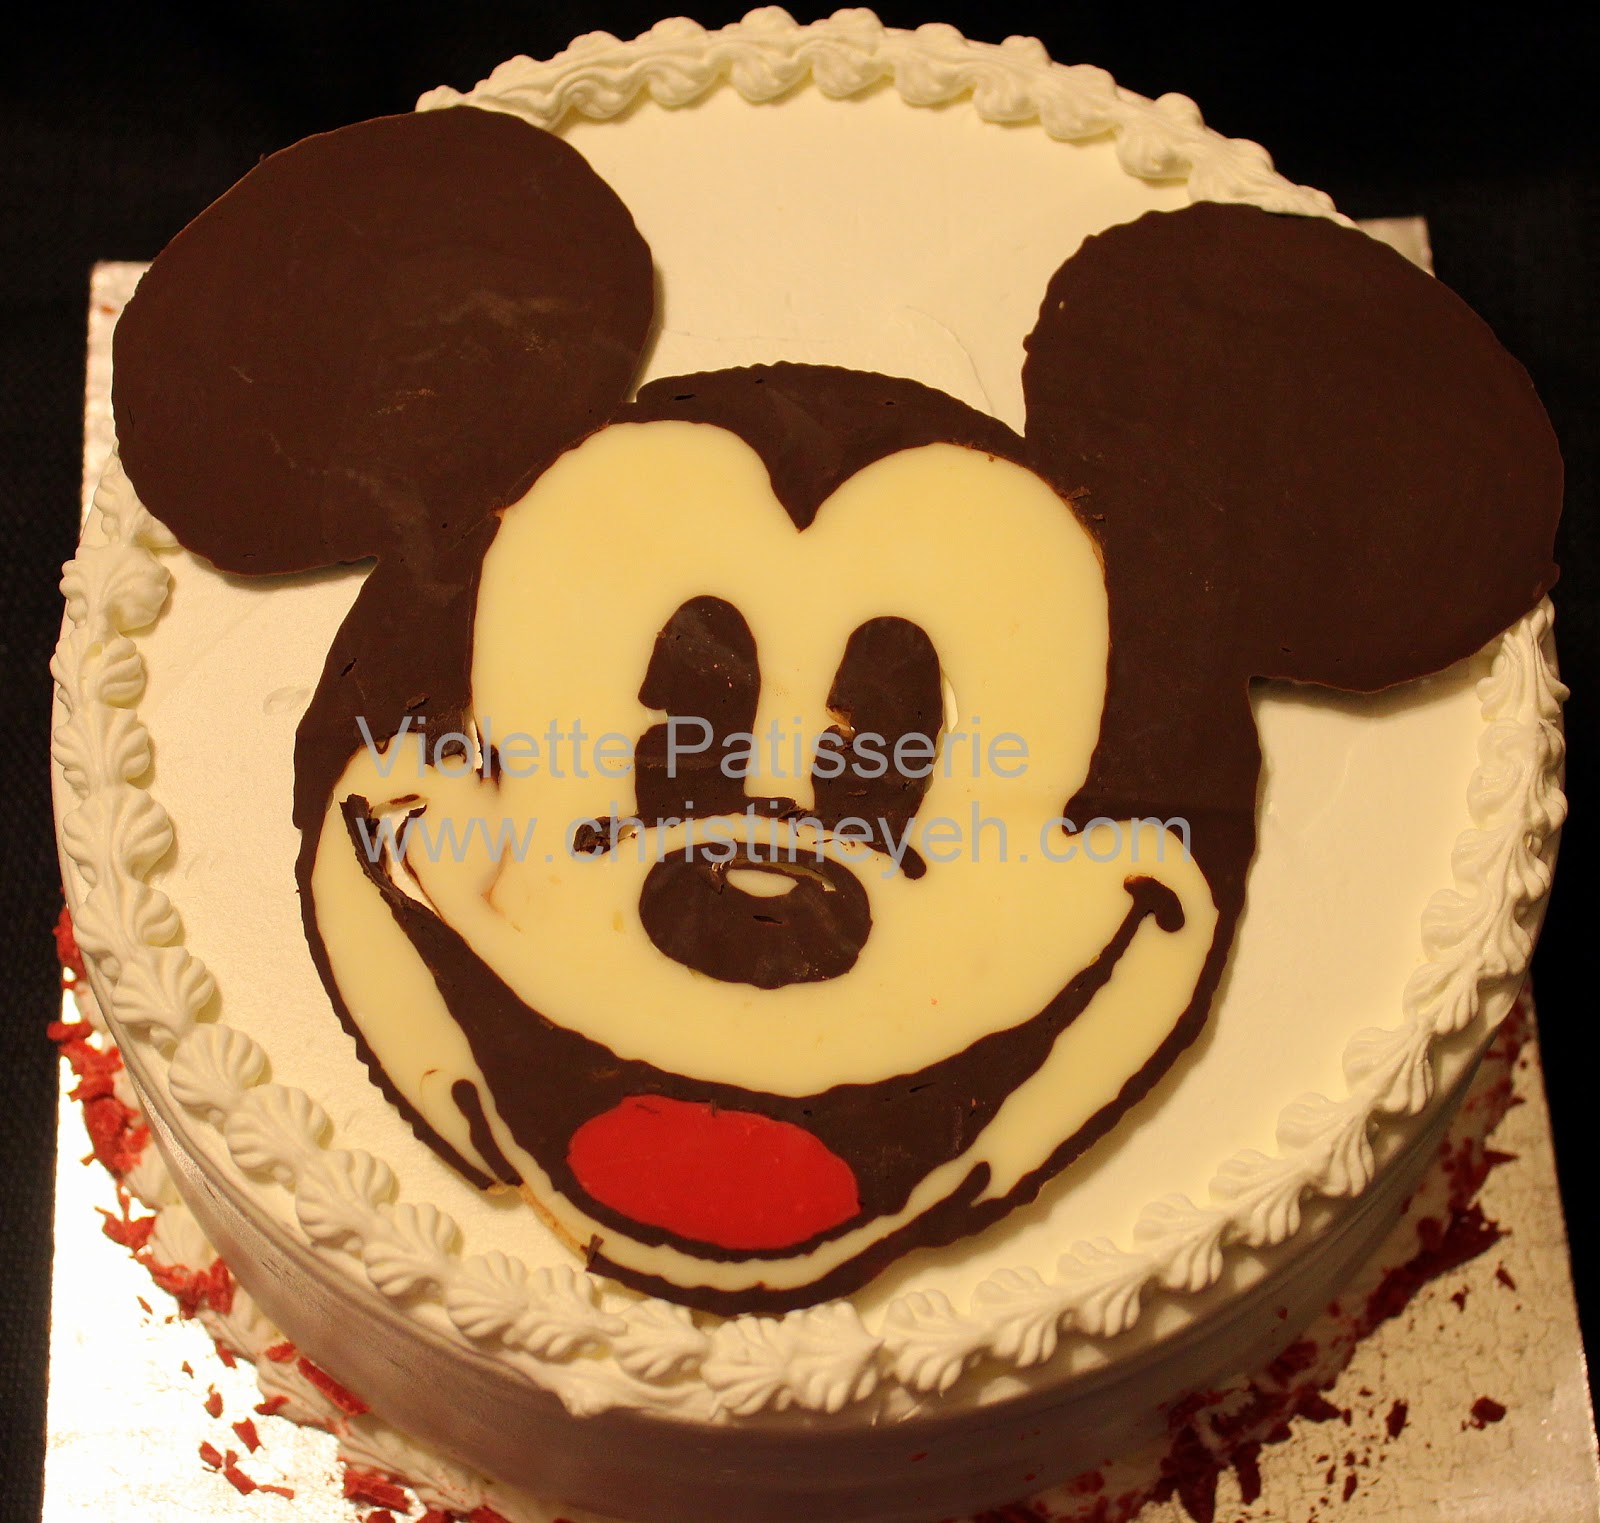 Butter . Flour & Me 爱的心灵之约: 米奇老鼠生日蛋糕（Micky Mouse Birthday Cake）